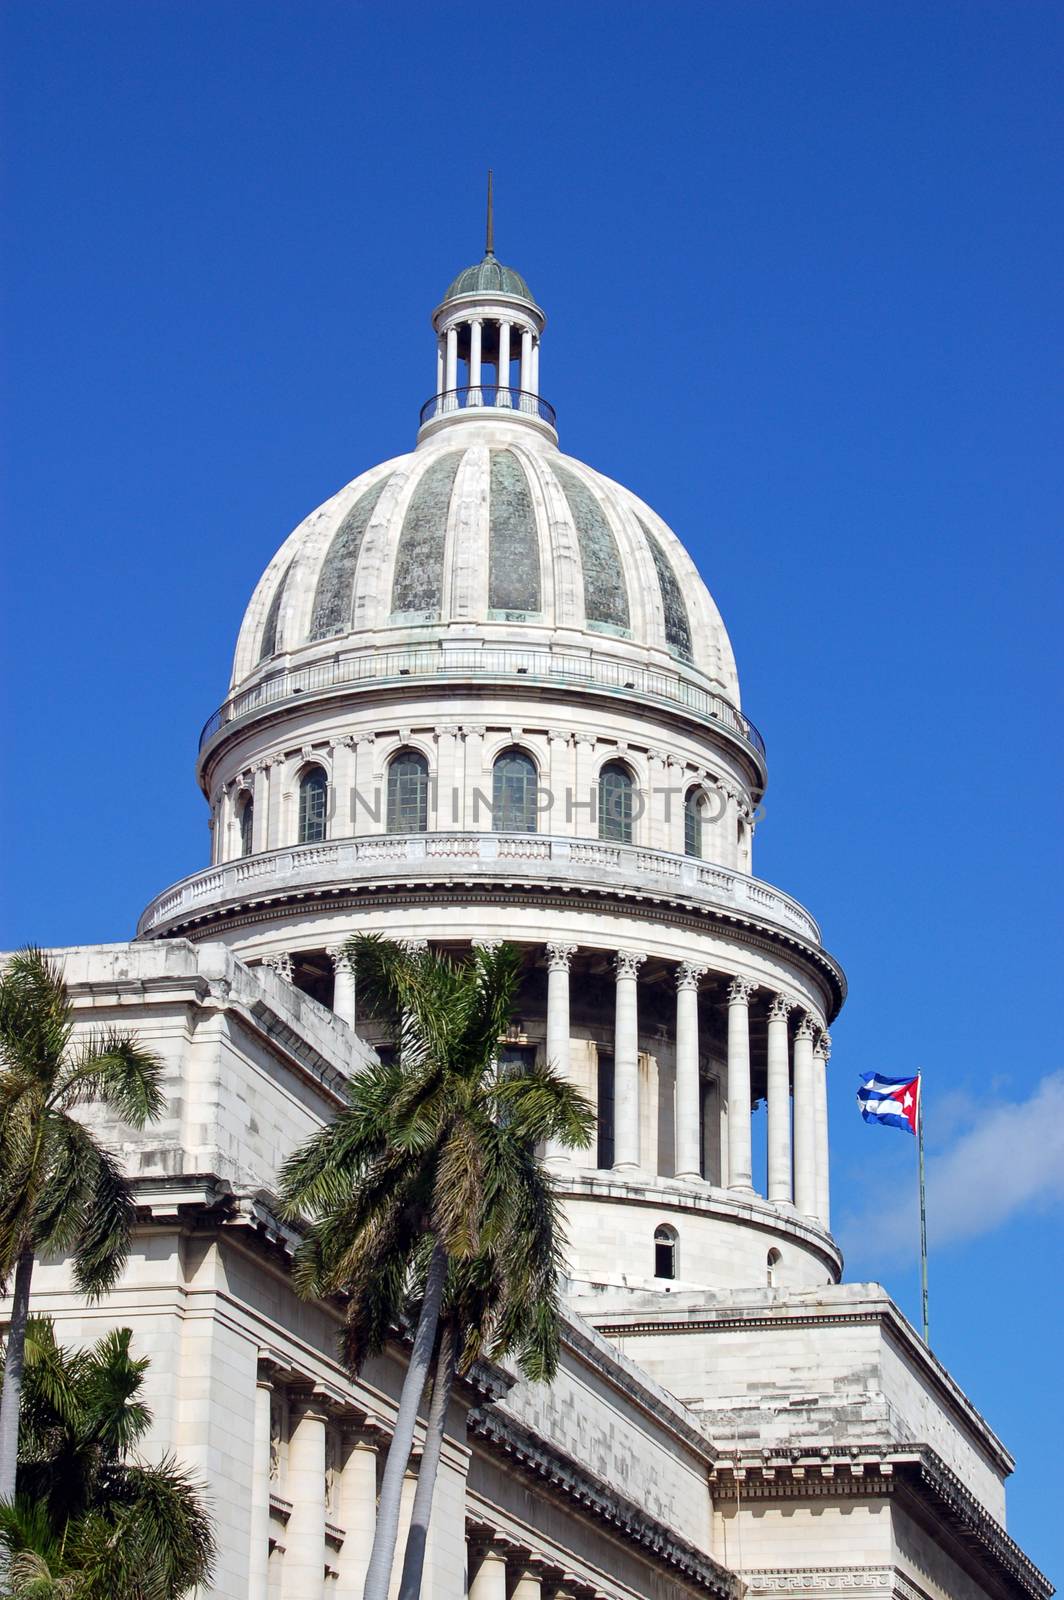 The landmark dome of Havana's Capitolio building, home to Cuba's Legislature.